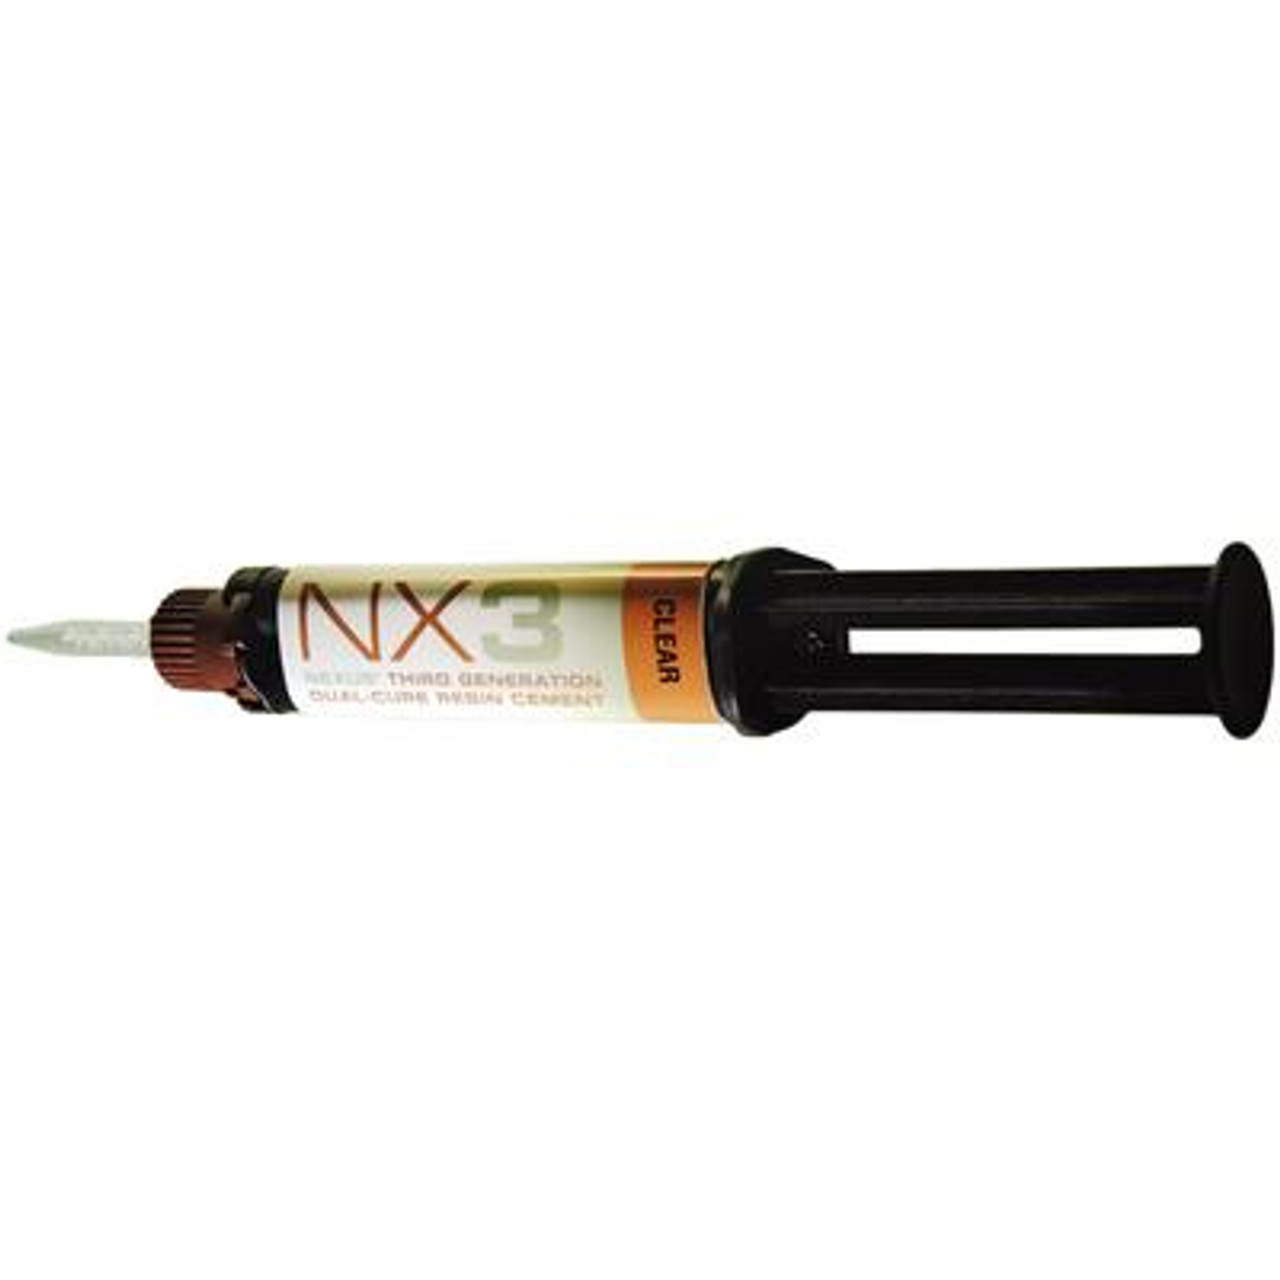 Kerr NX3 Nexus Permanent Cement Refills Dual-Cure,Clear Shade (5 gm)